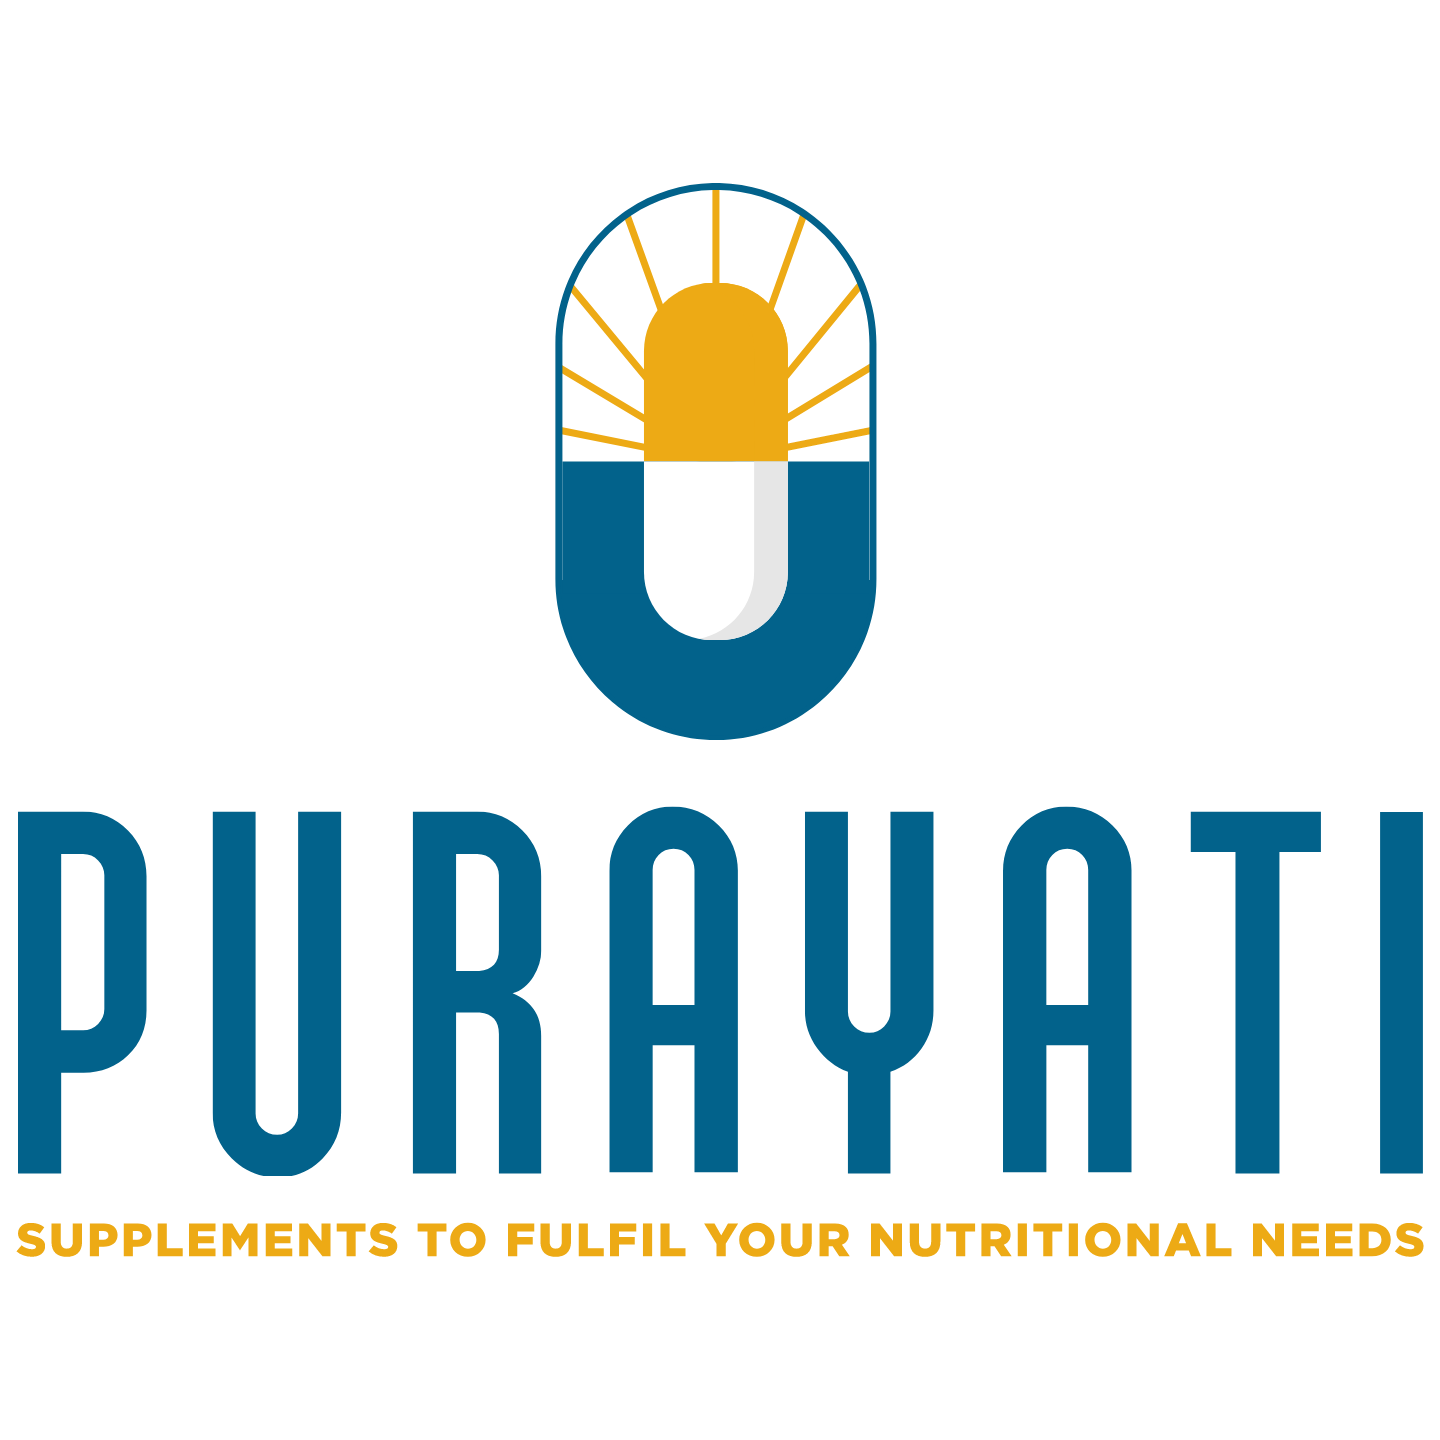 Purayati